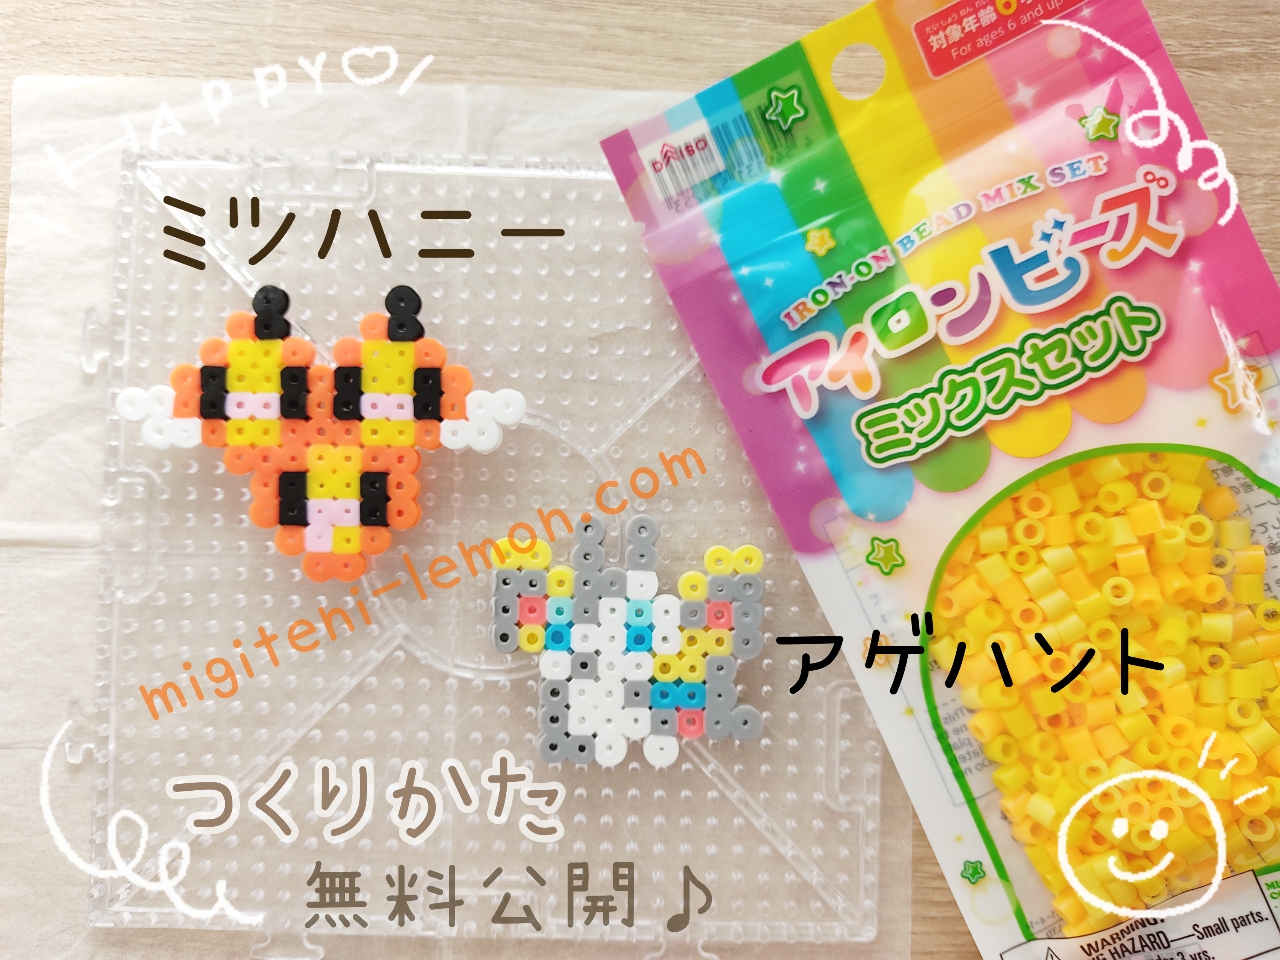 mituhoney-combee-agehanto-beautifly-beads-pokemon-free-zuan